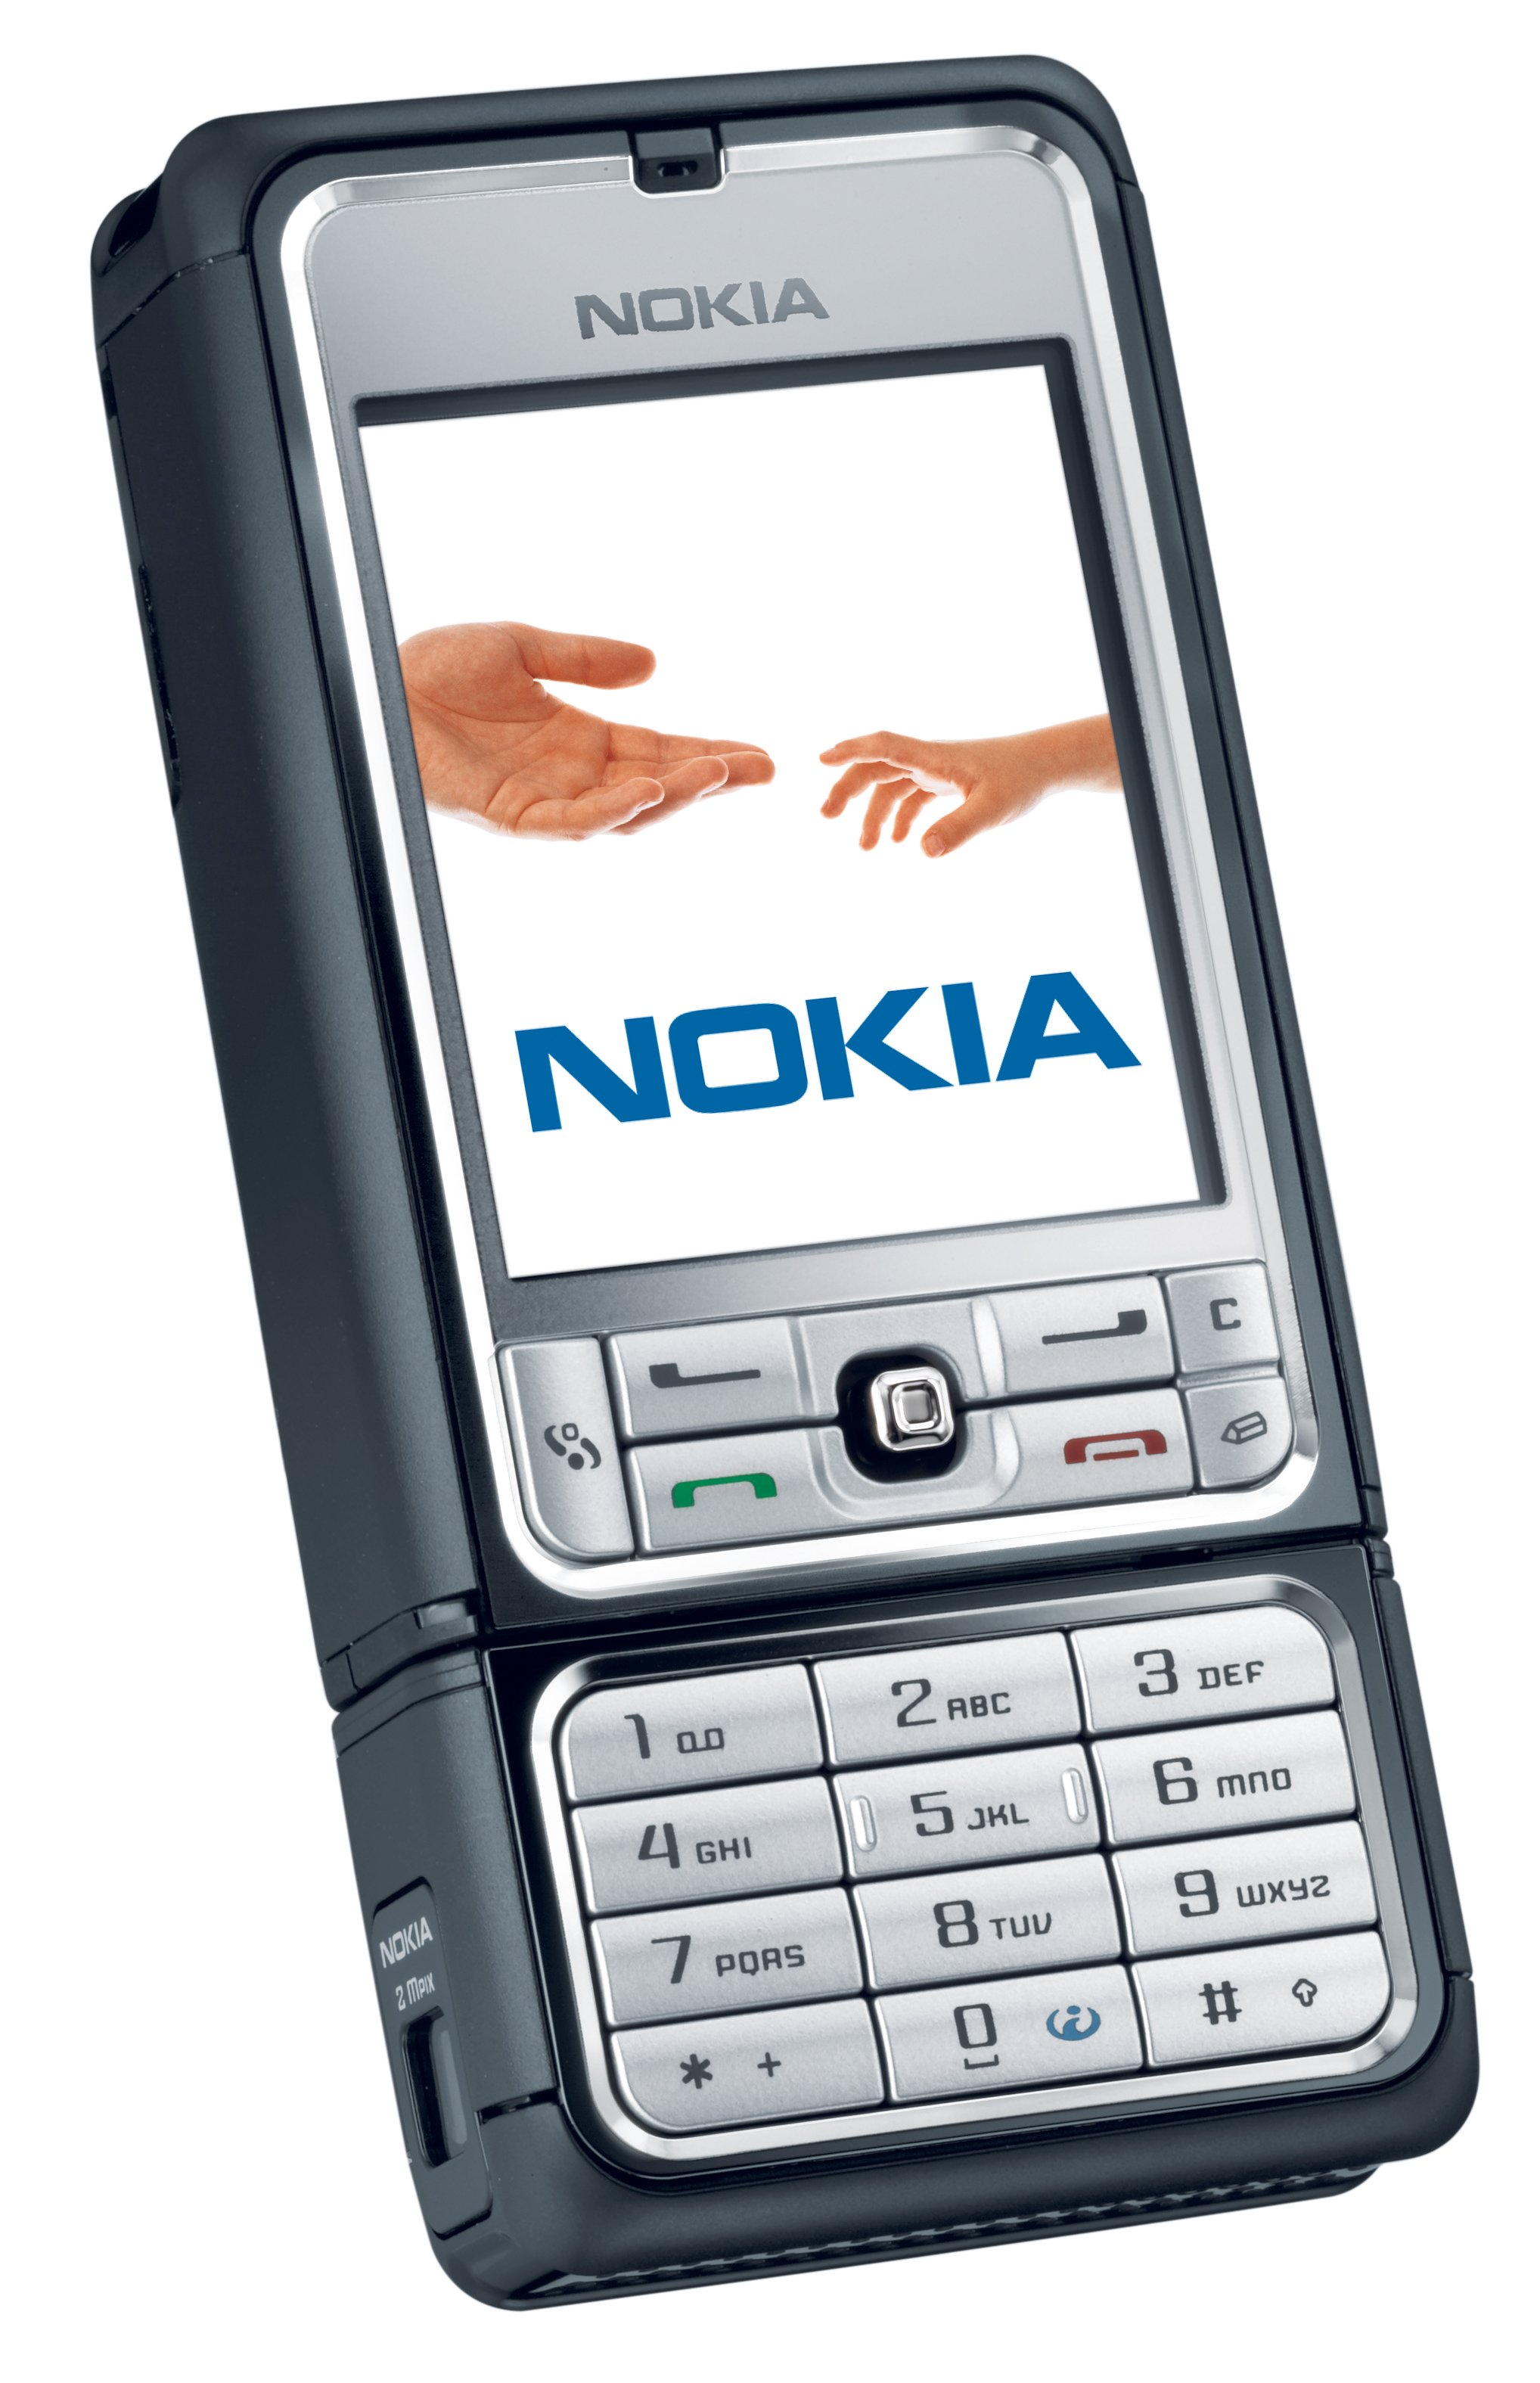 Картинка телефона нокиа. Nokia 3250. Nokia 3250 XPRESSMUSIC. Nokia 3250 мобильные телефоны Nokia. Нокия с поворотной камерой 3250.